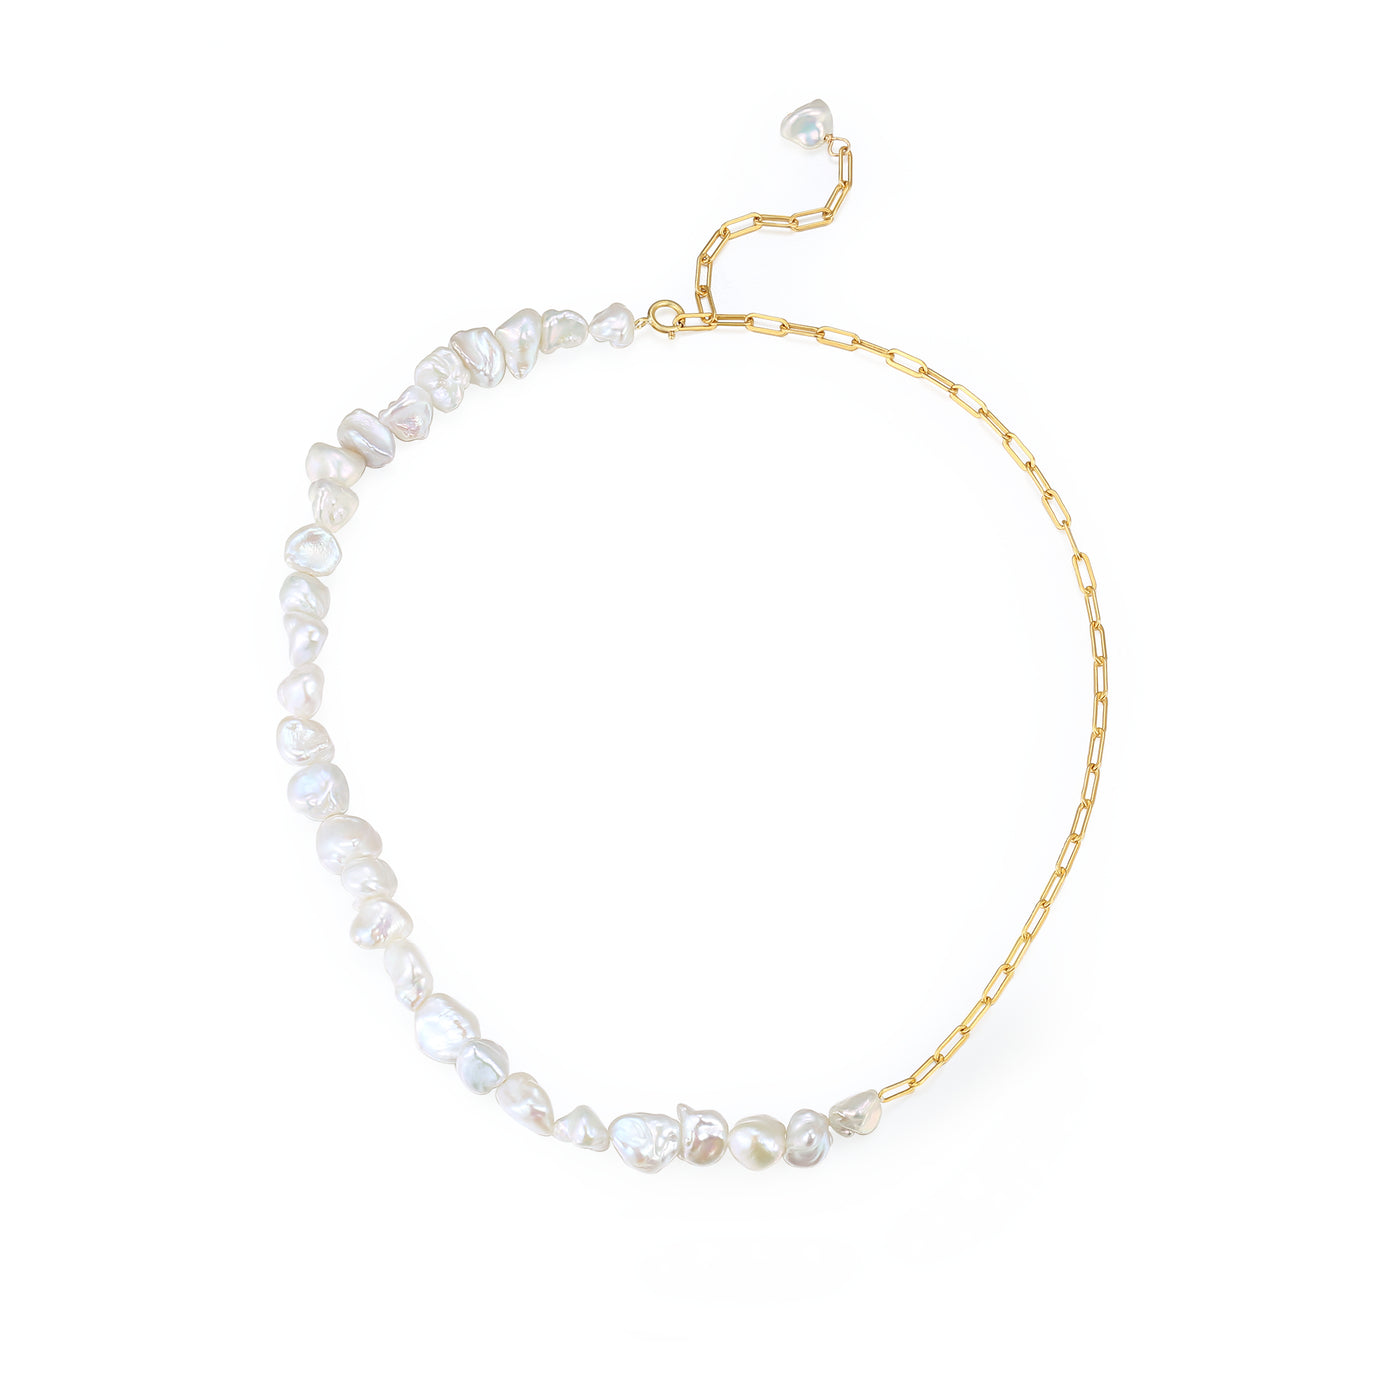 COCO KIM Baroque Series Half Bead Half Chain Choker Necklace